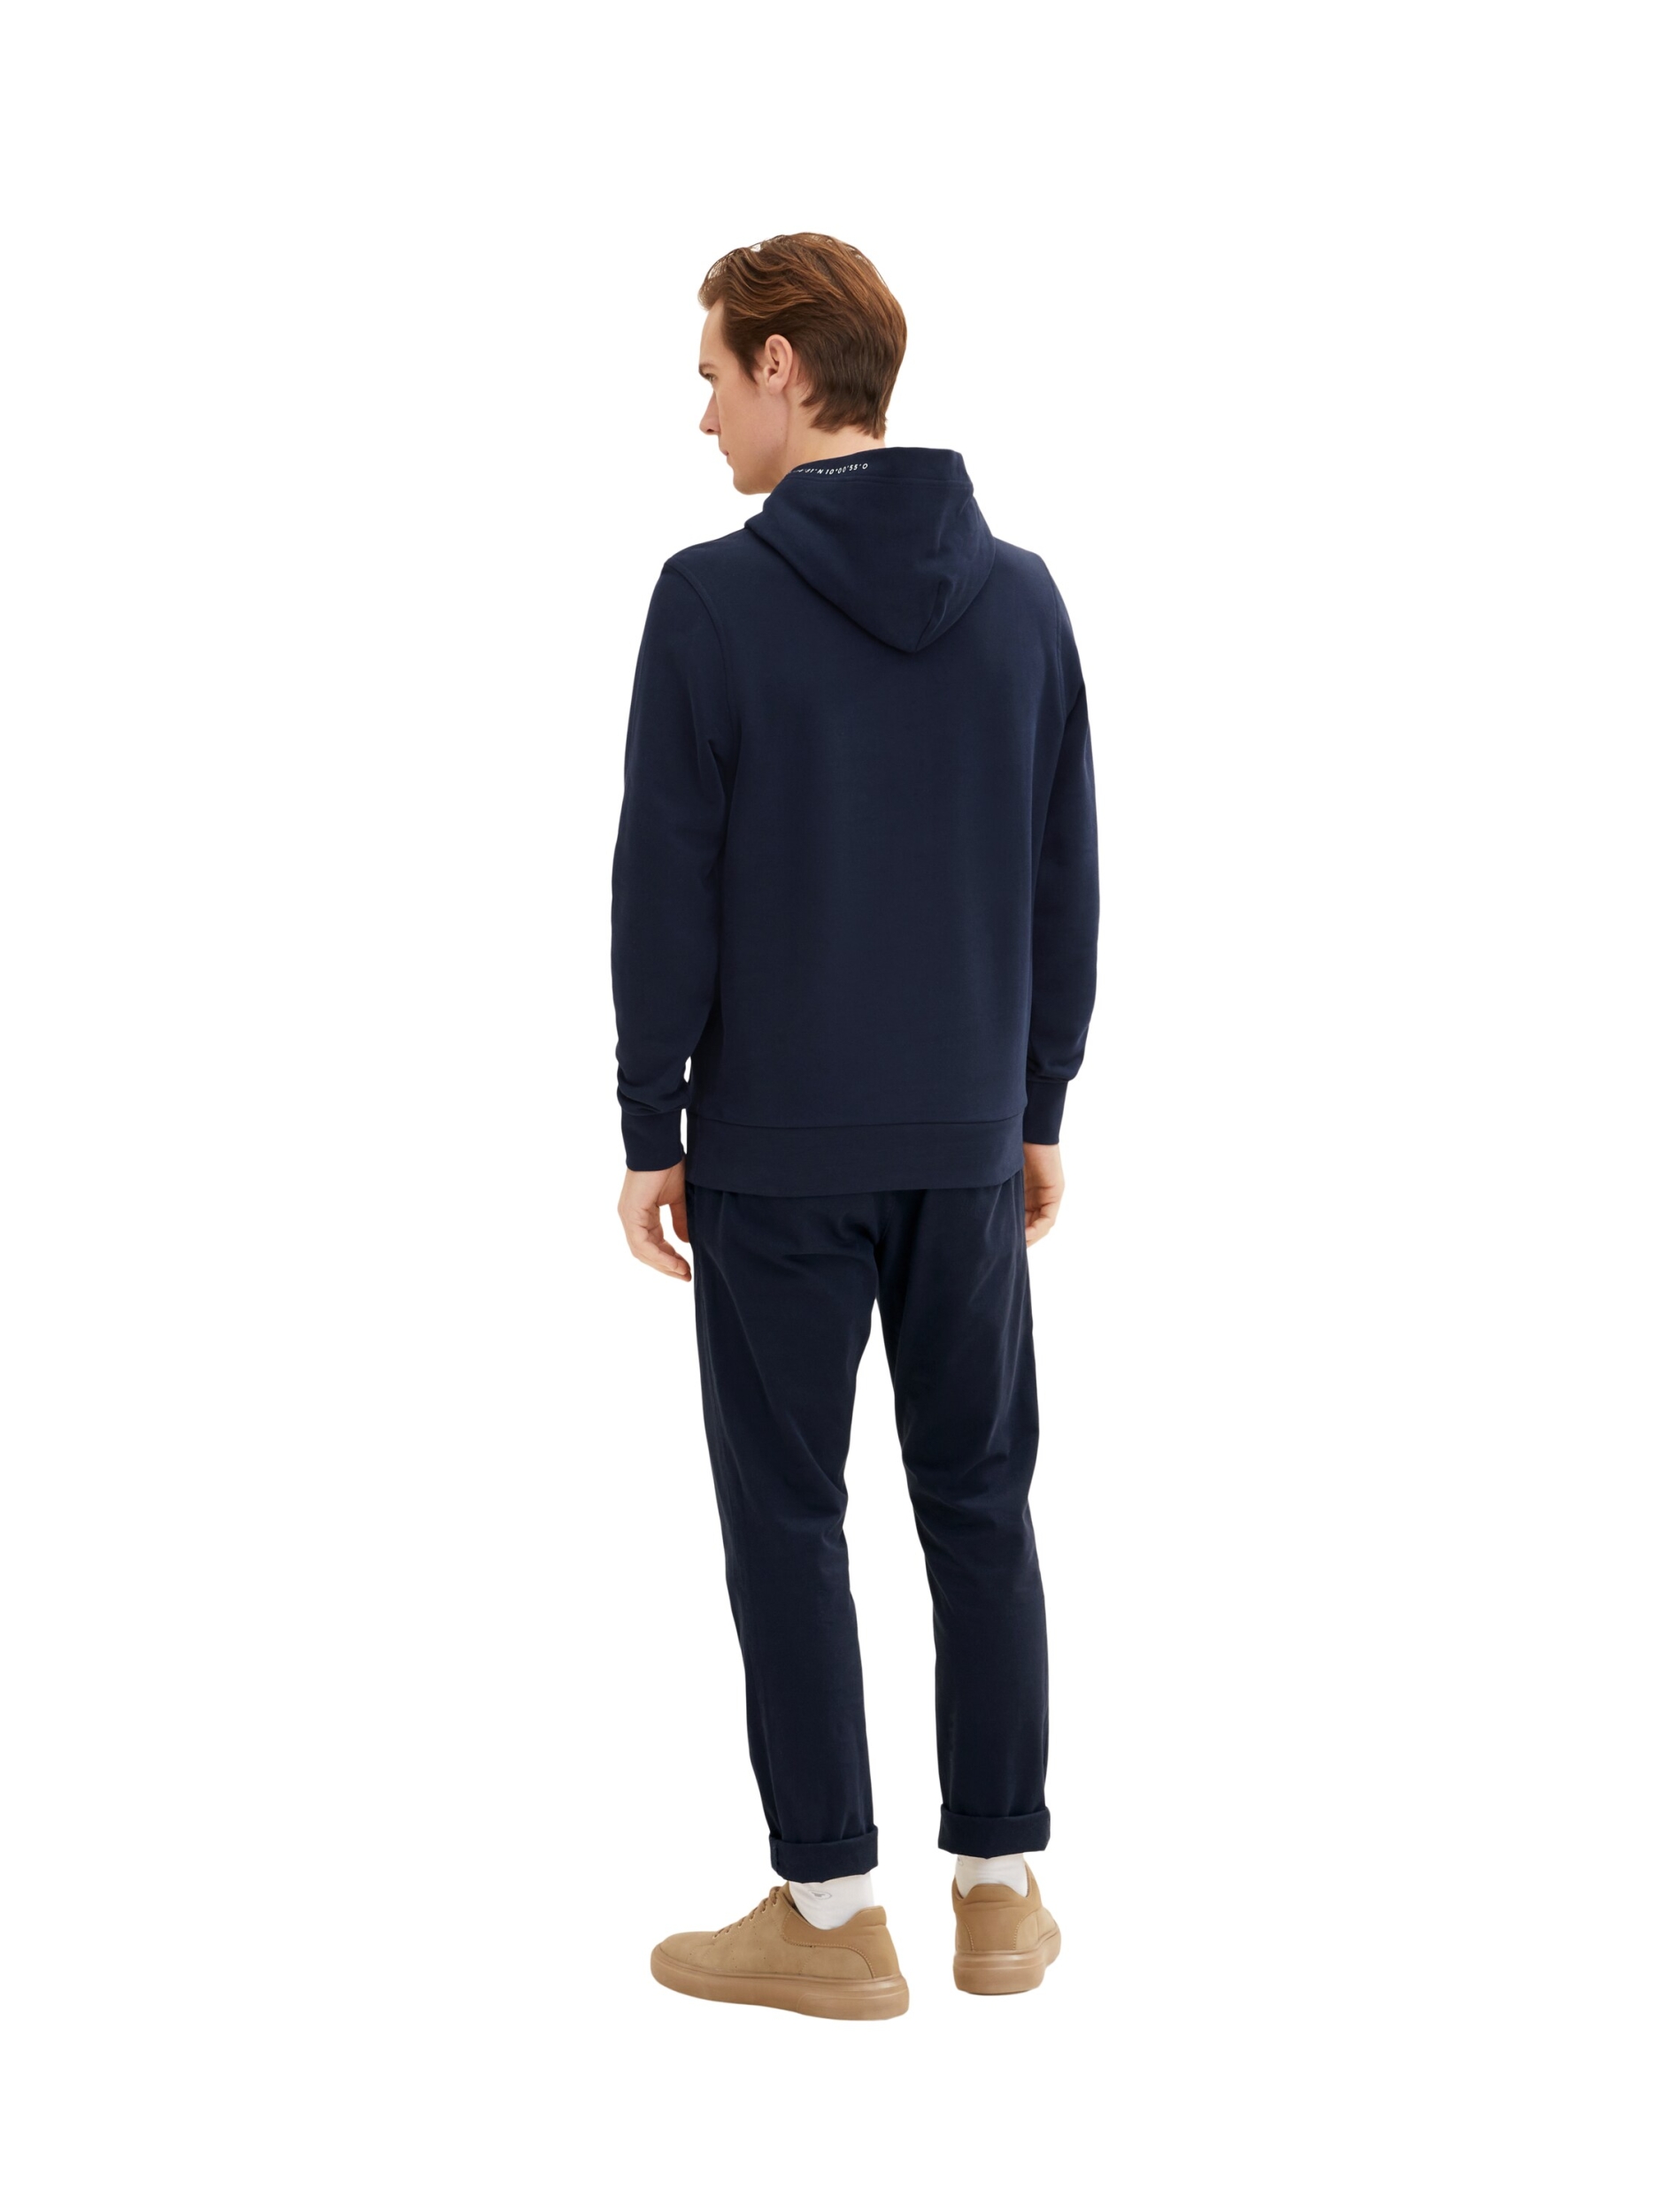 TOM TAILOR hoodie with structur online kaufen